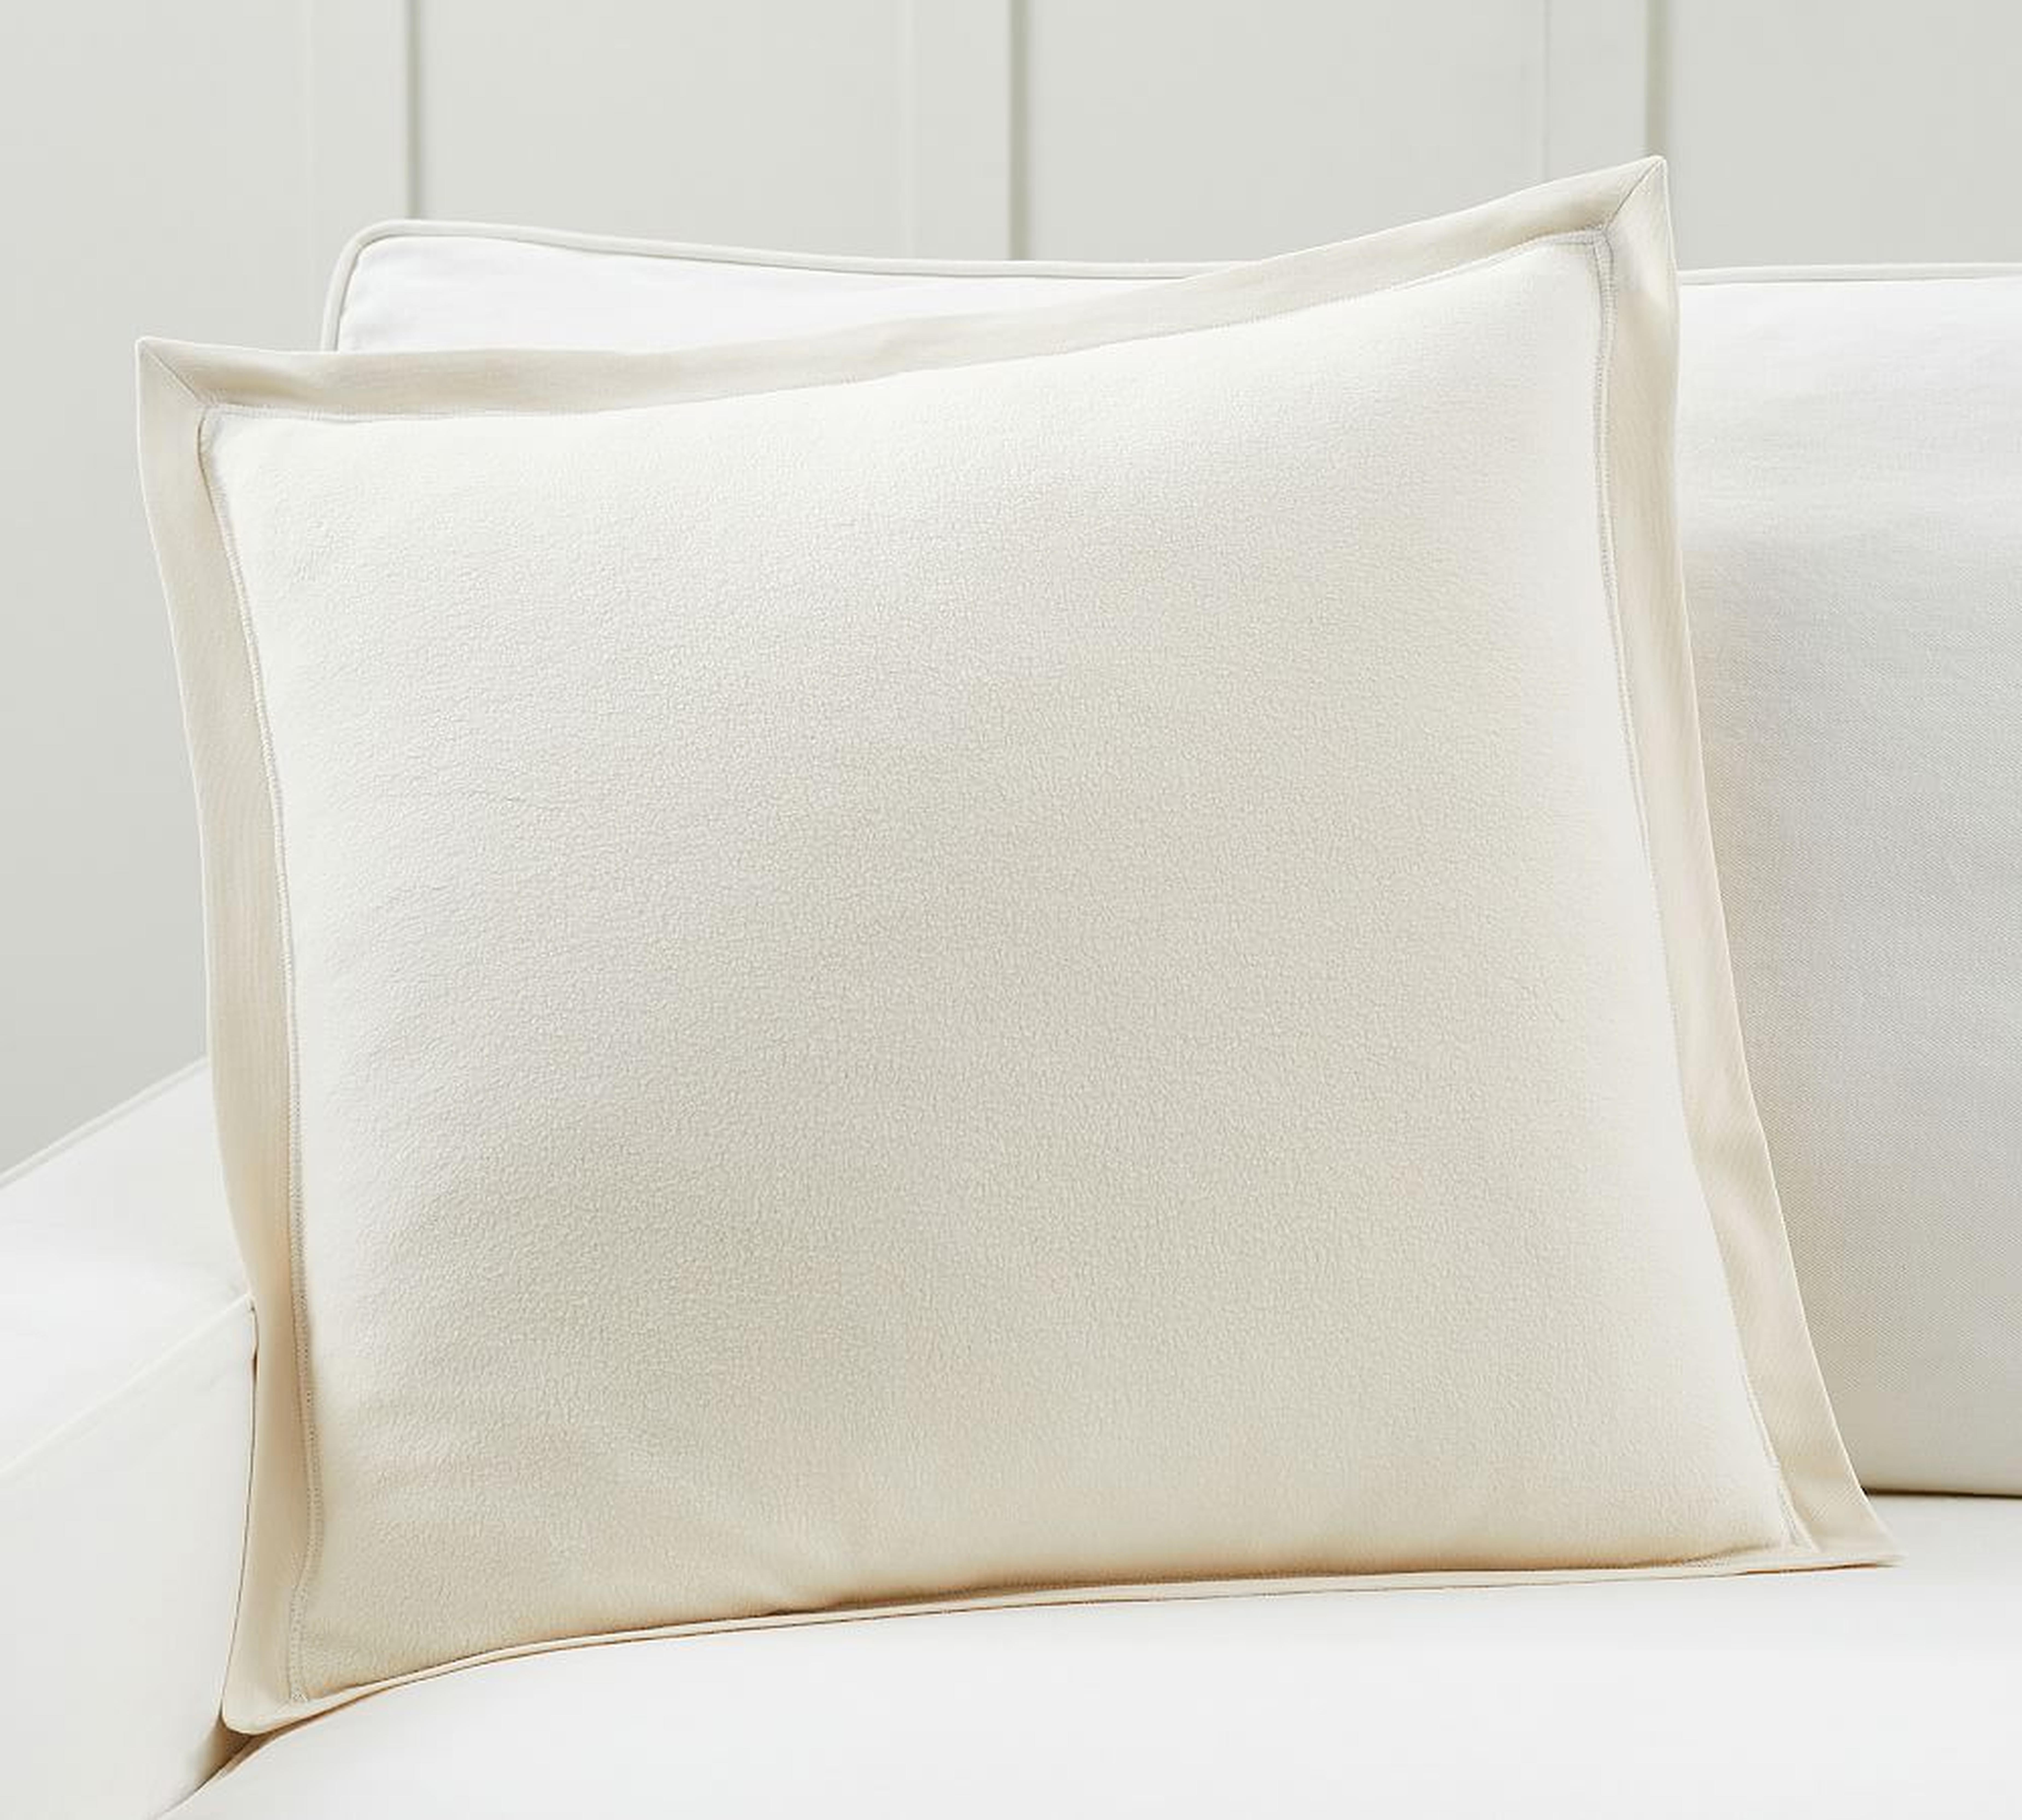 Cozy Fleece Pillow Cover - Set of 2, 22 x 22", Ivory - Pottery Barn